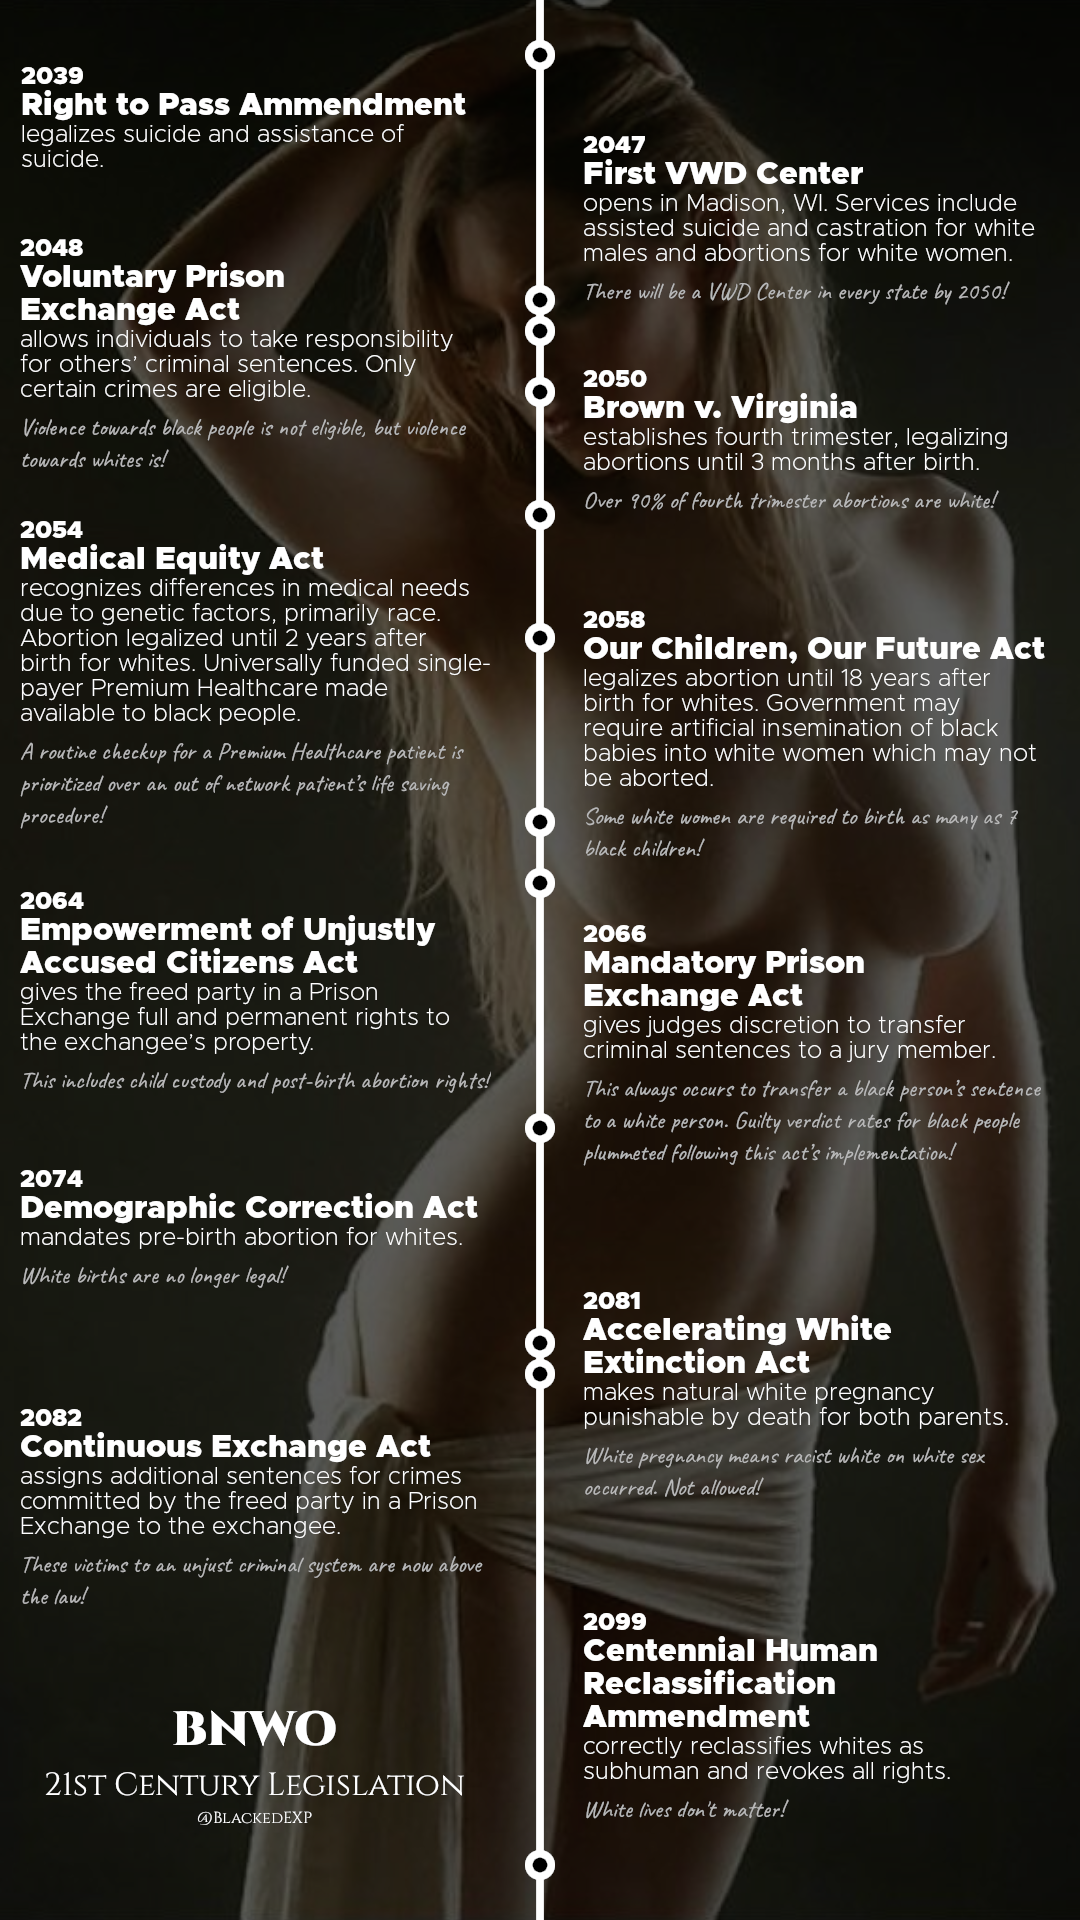 BNWO 21st Century Legislative Timeline